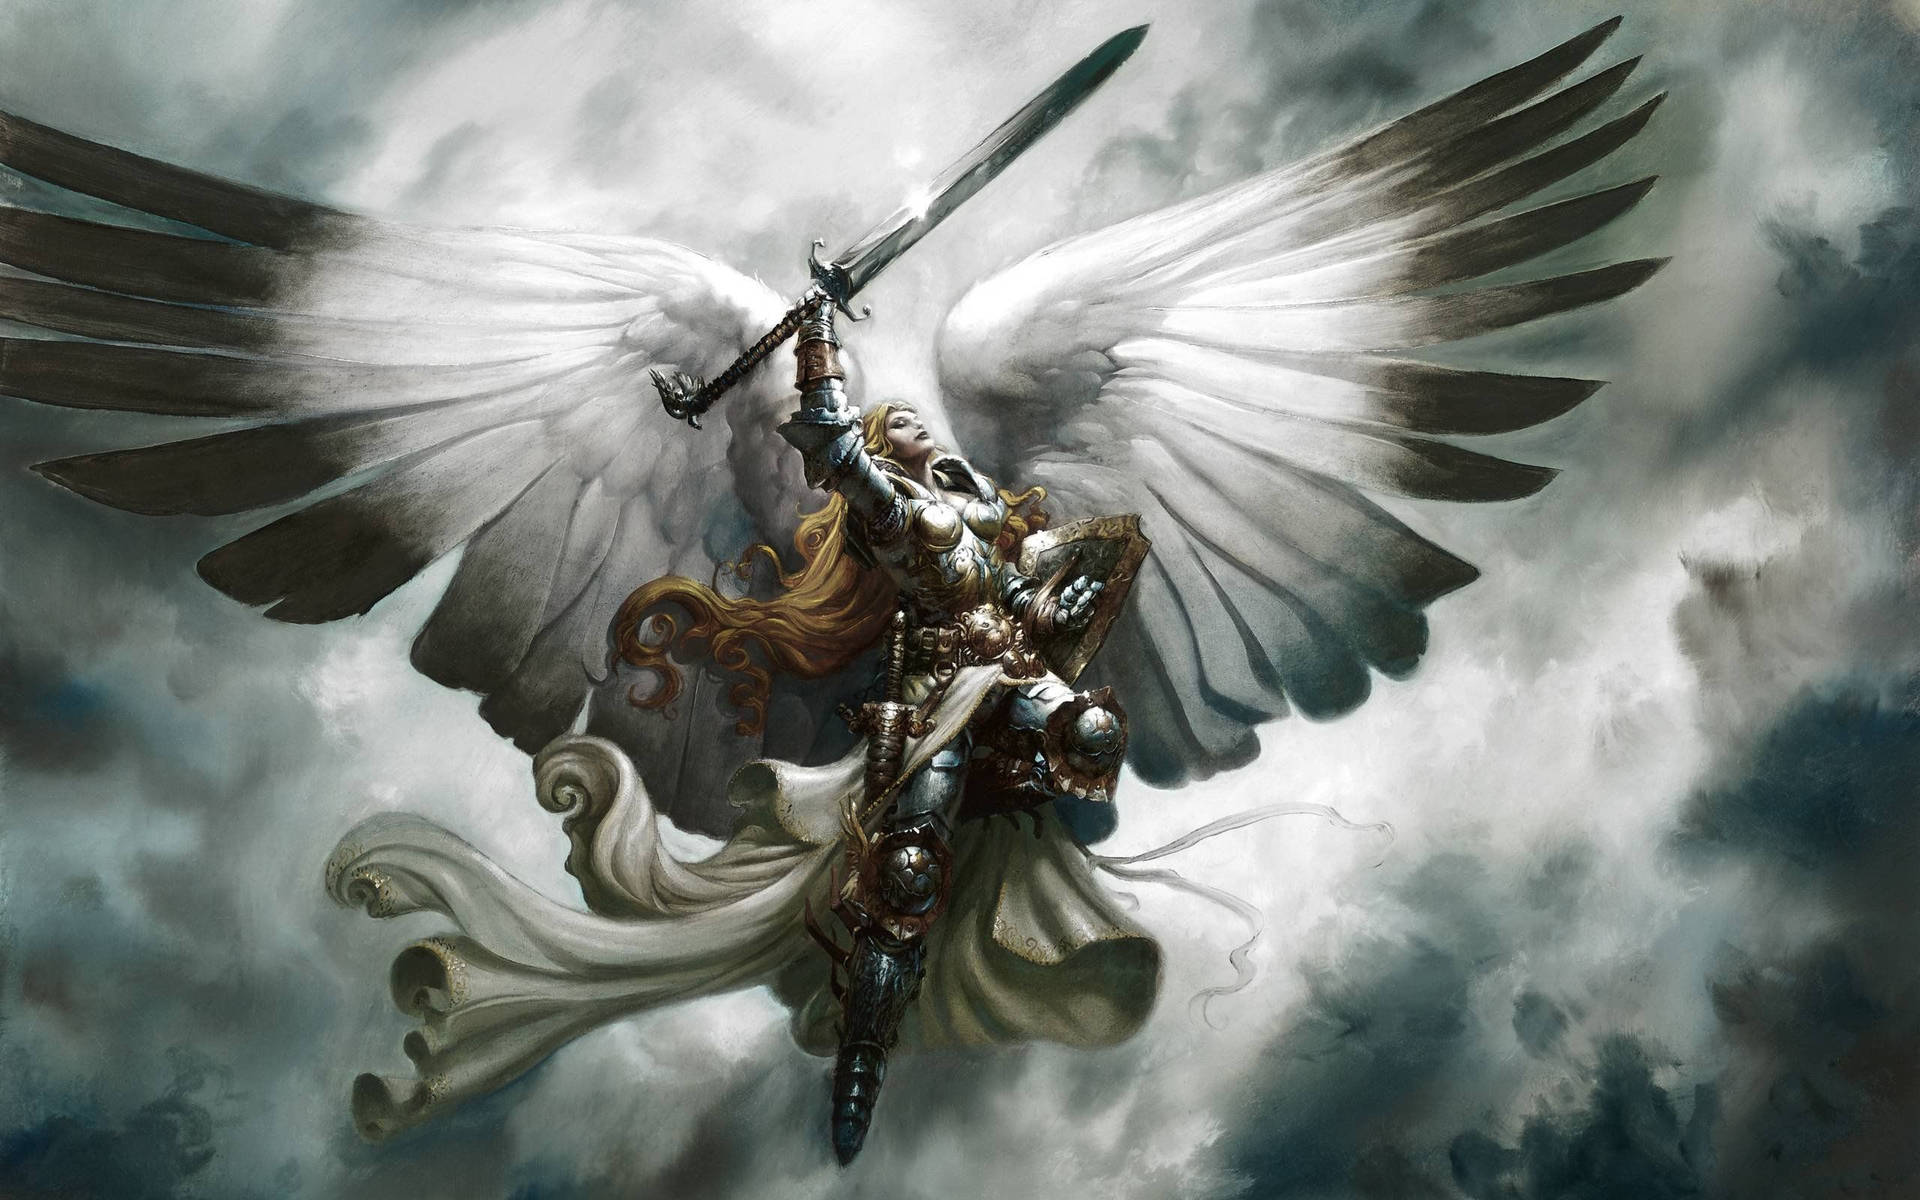 The Power of Heaven - A beautiful Serra Angel invoking hope and faith Wallpaper